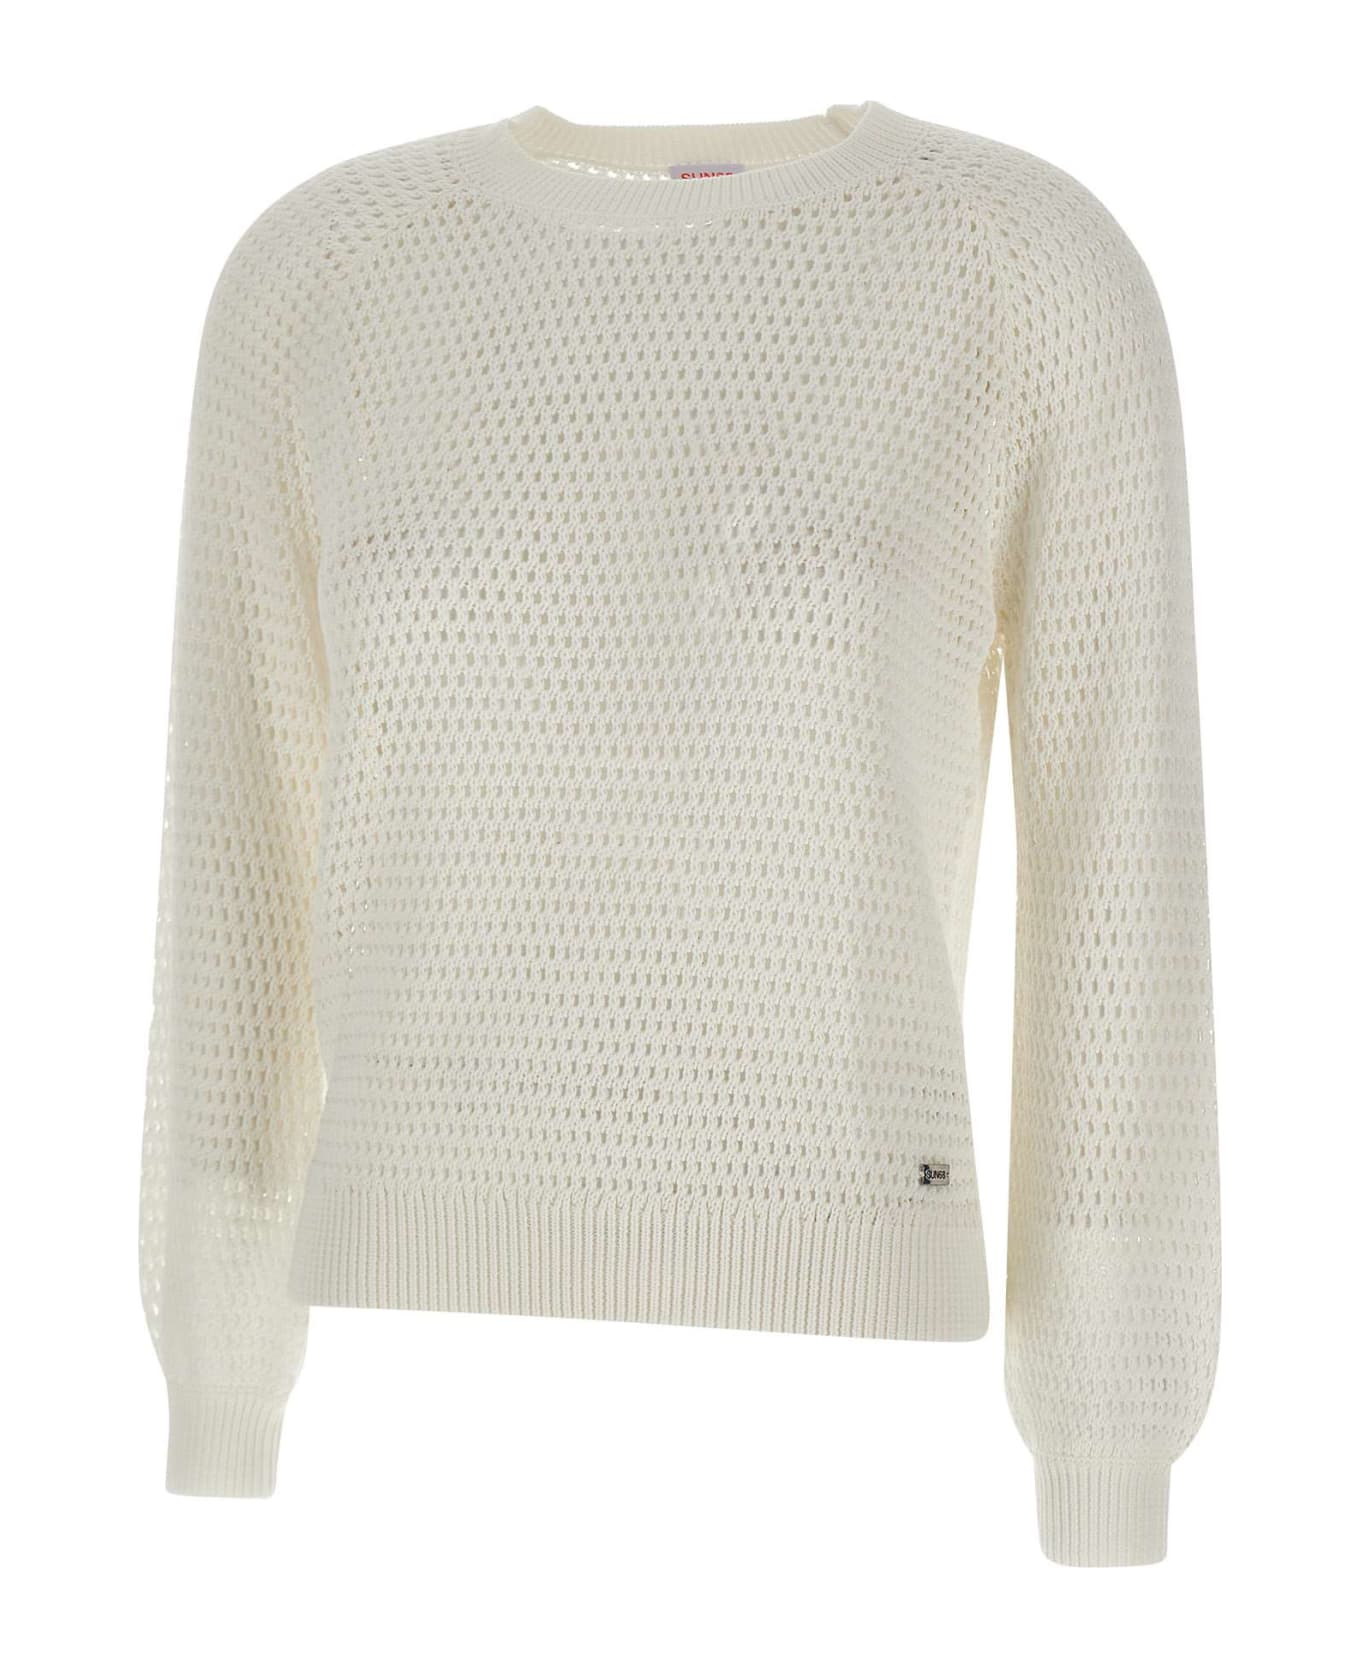 Sun 68 "round Neck" Cotton Sweater - WHITE